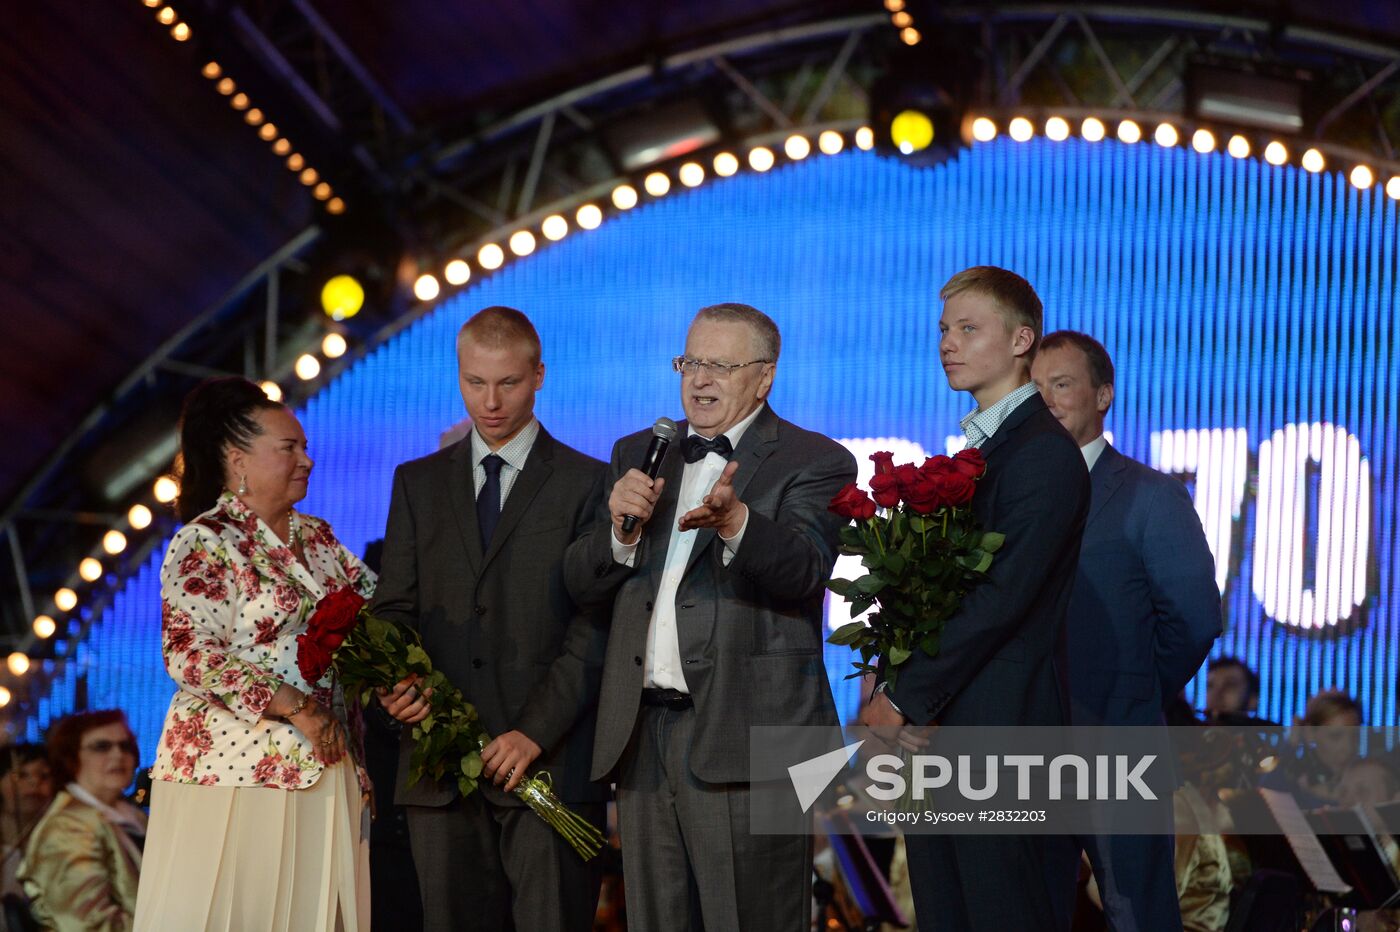 LDPR leader Vladimir Zhirinovsky celebrates his 70th anniversary